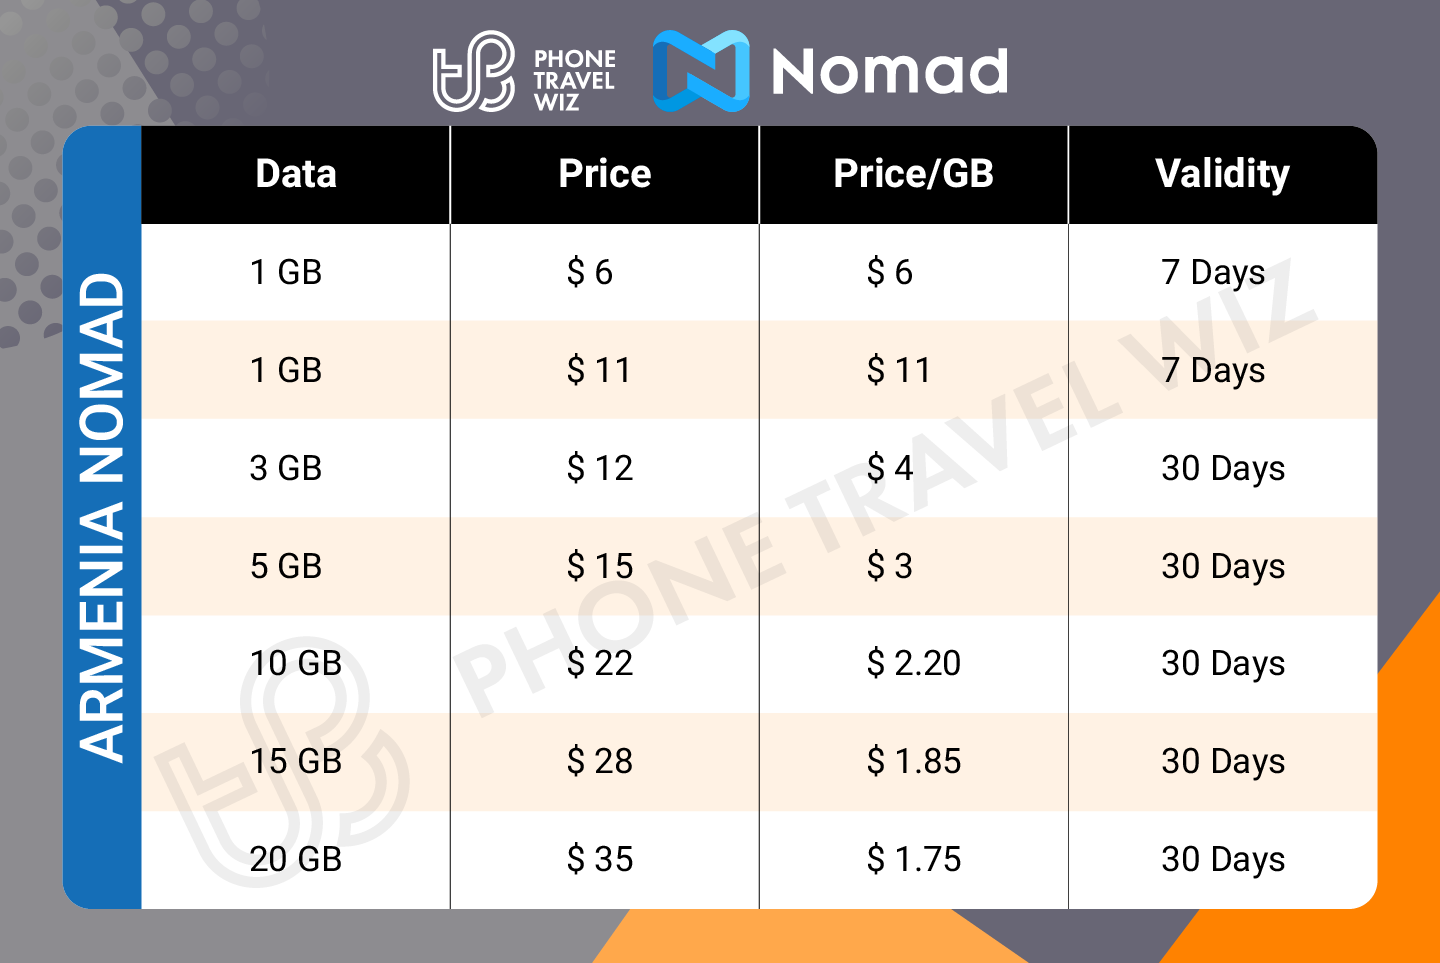 Nomad Armenia eSIM Price & Data Details Infographic by Phone Travel Wiz